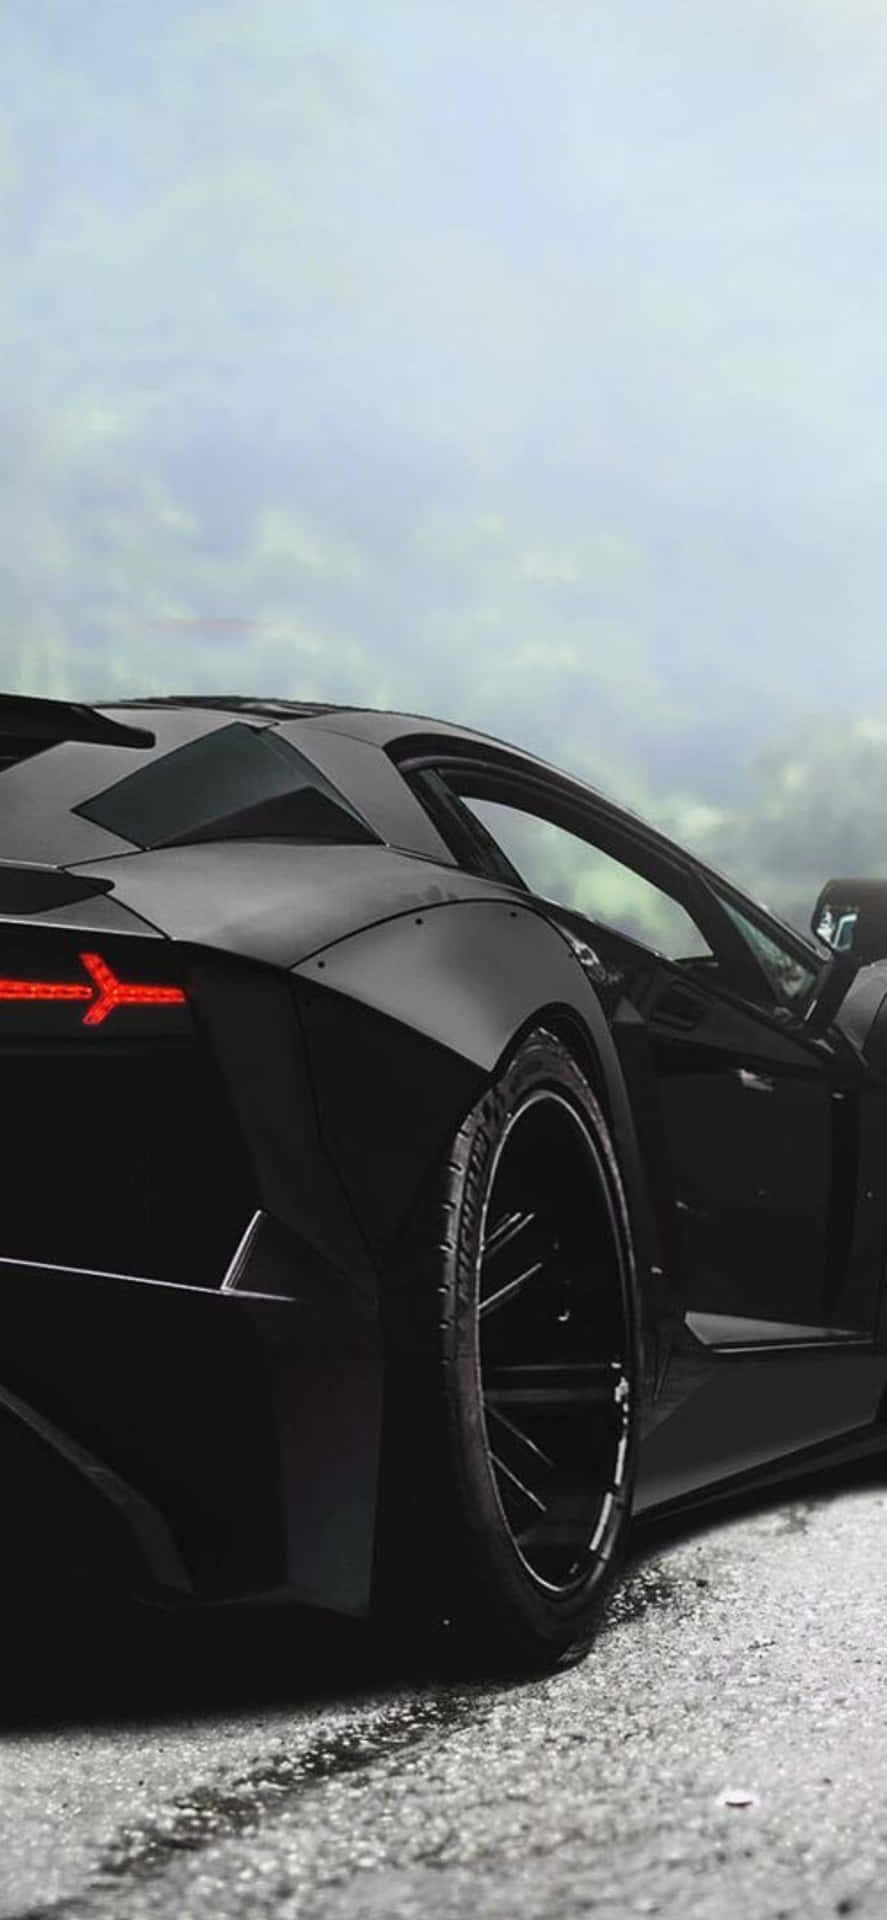 iPhone XS Max Lamborghini Black Rear Background